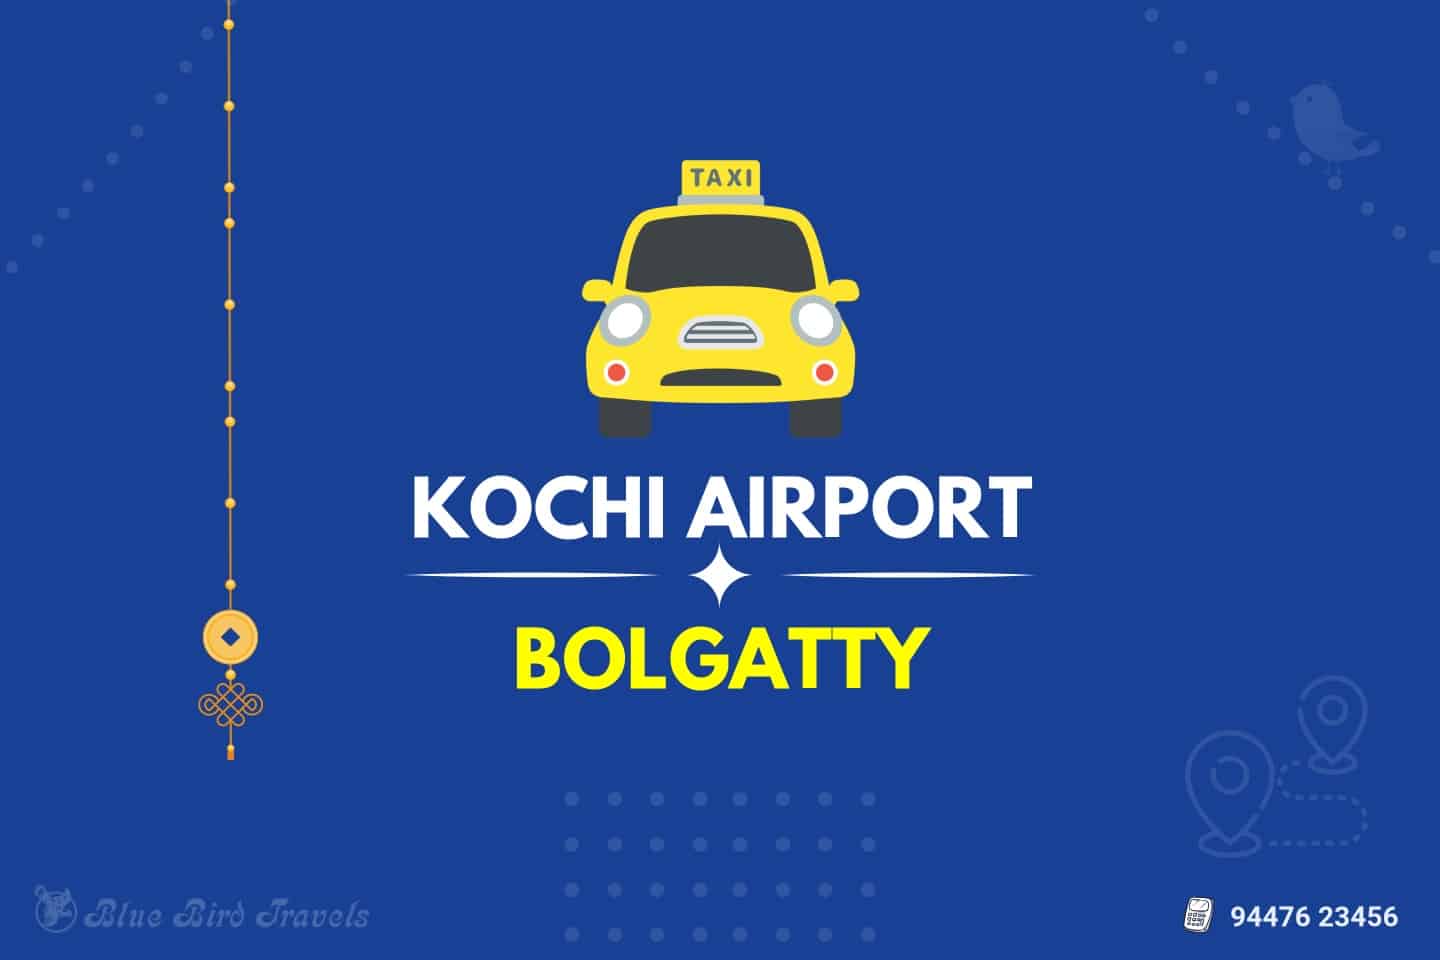 Kochi Airport to Bolgatty Taxi 2